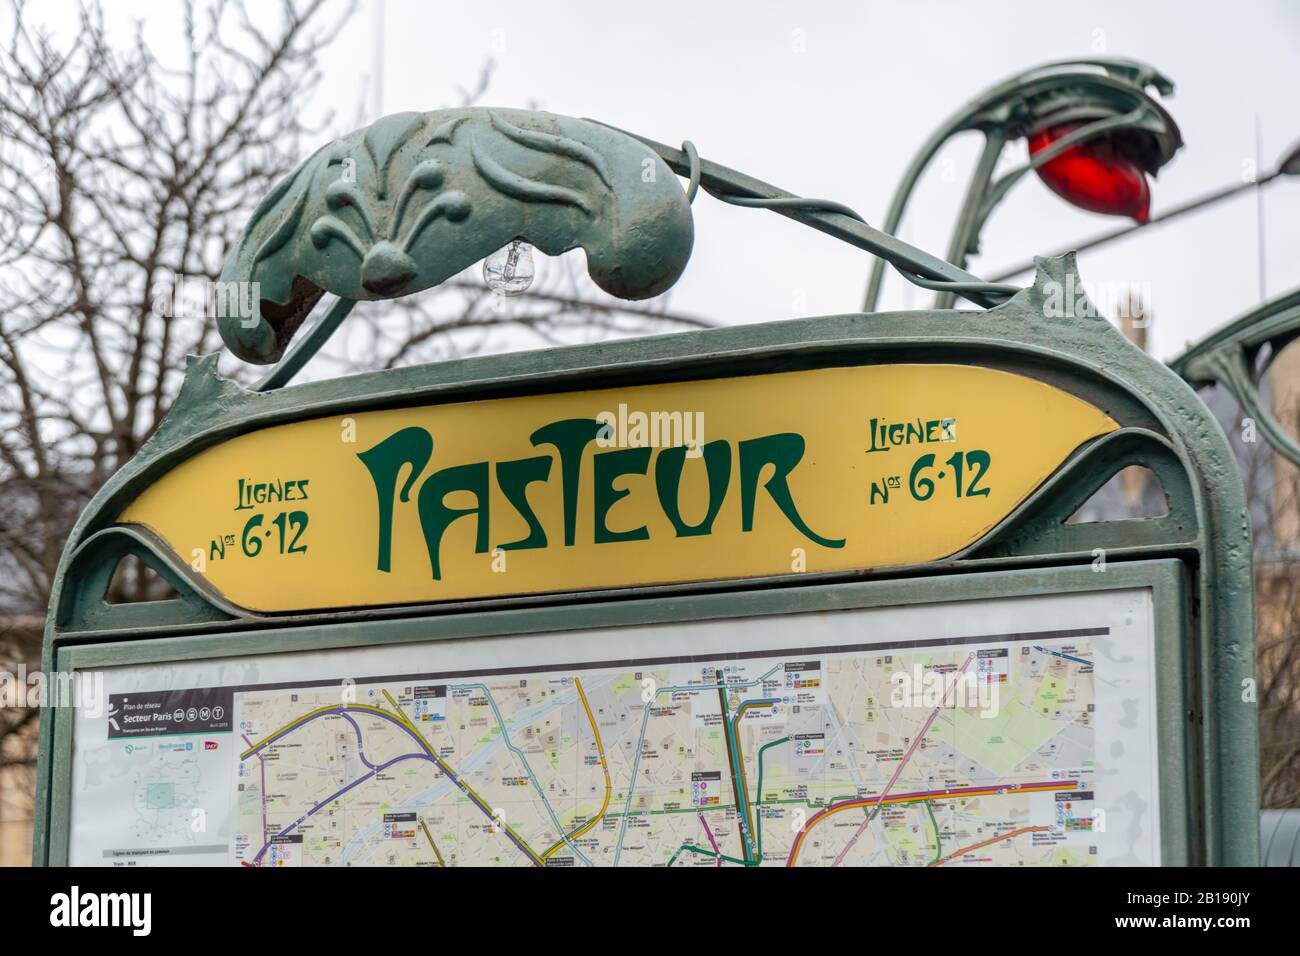 Pasteur metro station sign in Paris Stock Photo